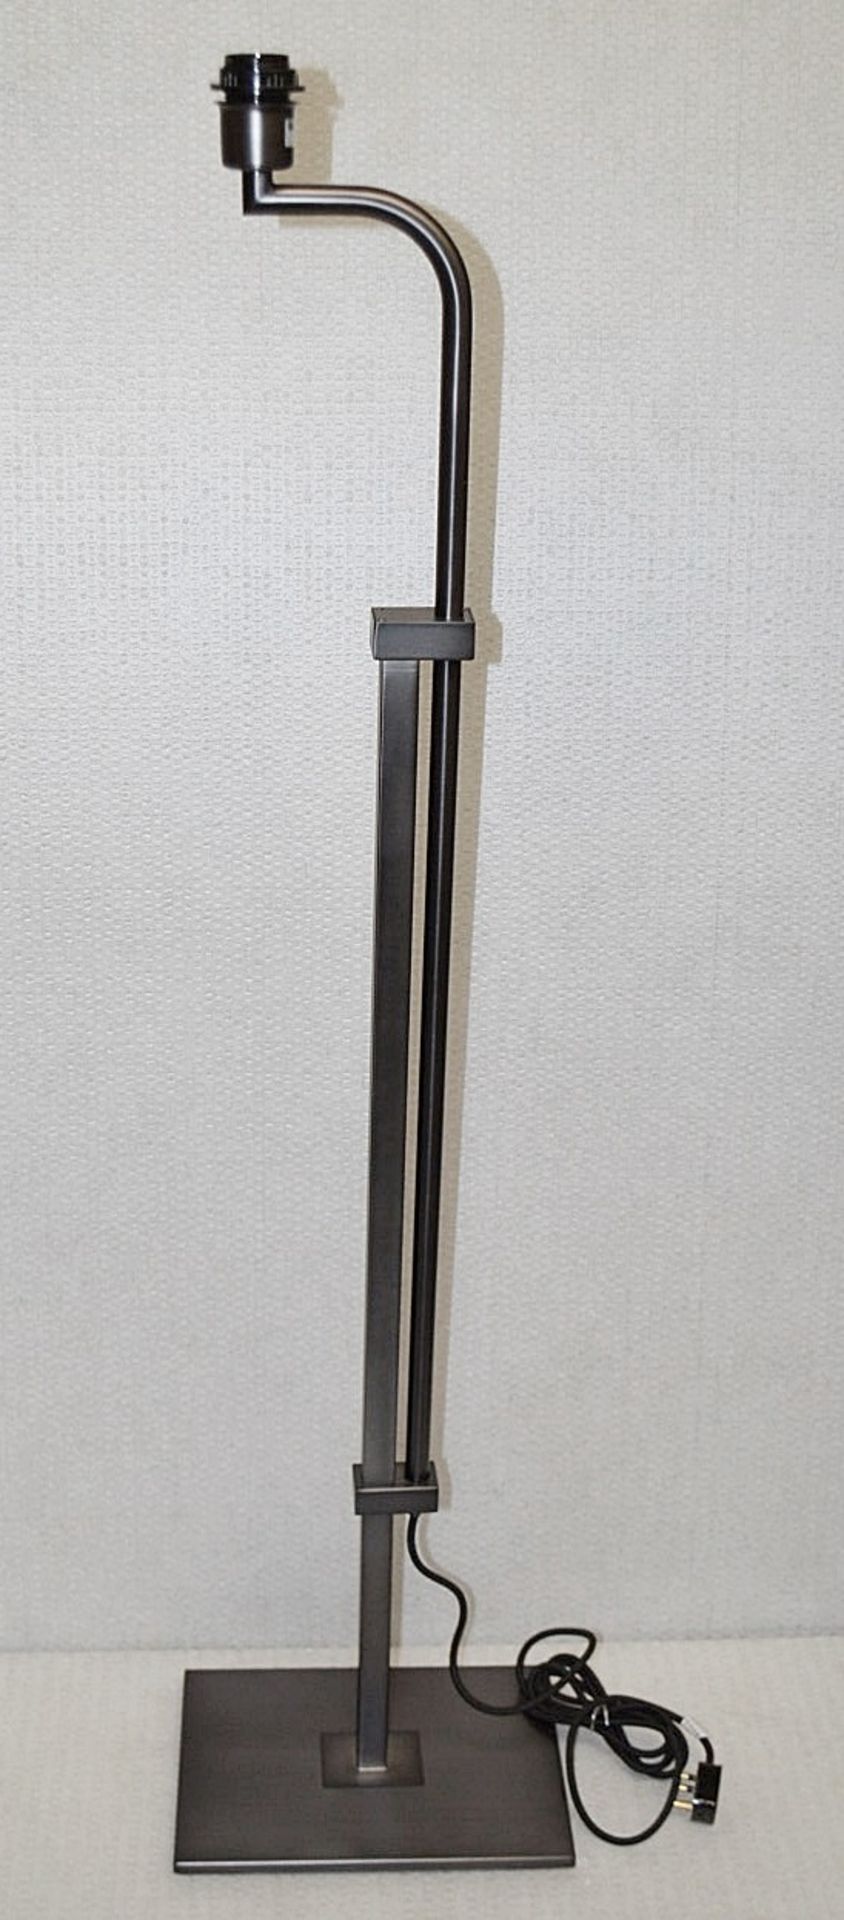 1 x CHELSOM Freestanding Floor Lamp In A Black Bronze Finish - Unused Boxed Stock